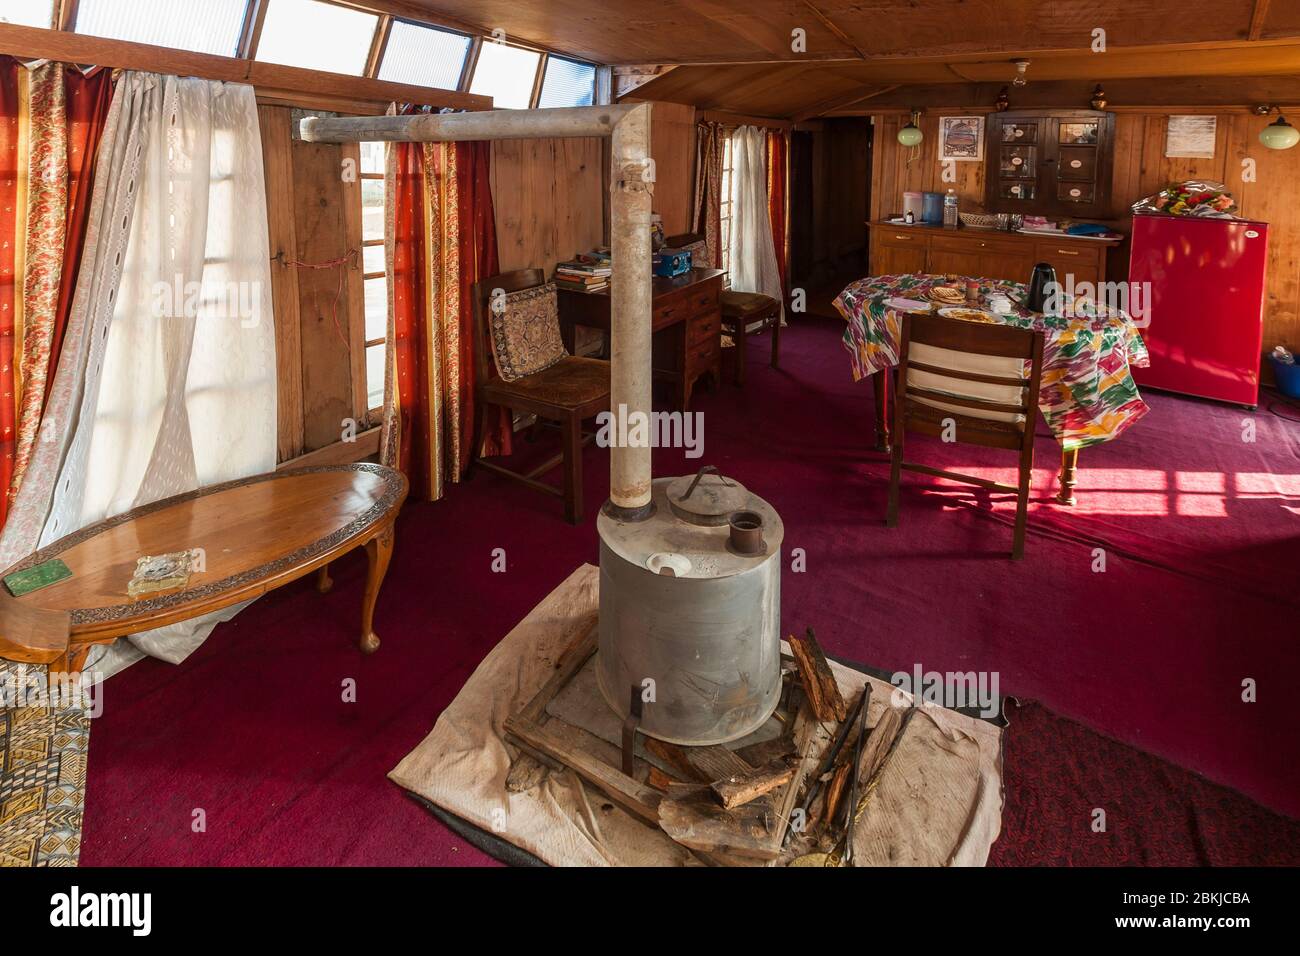 India, Jammu and Kashmir, Srinagar, Nageen lake, Khosar Houseboat, houseboat accomodation, dining room Stock Photo